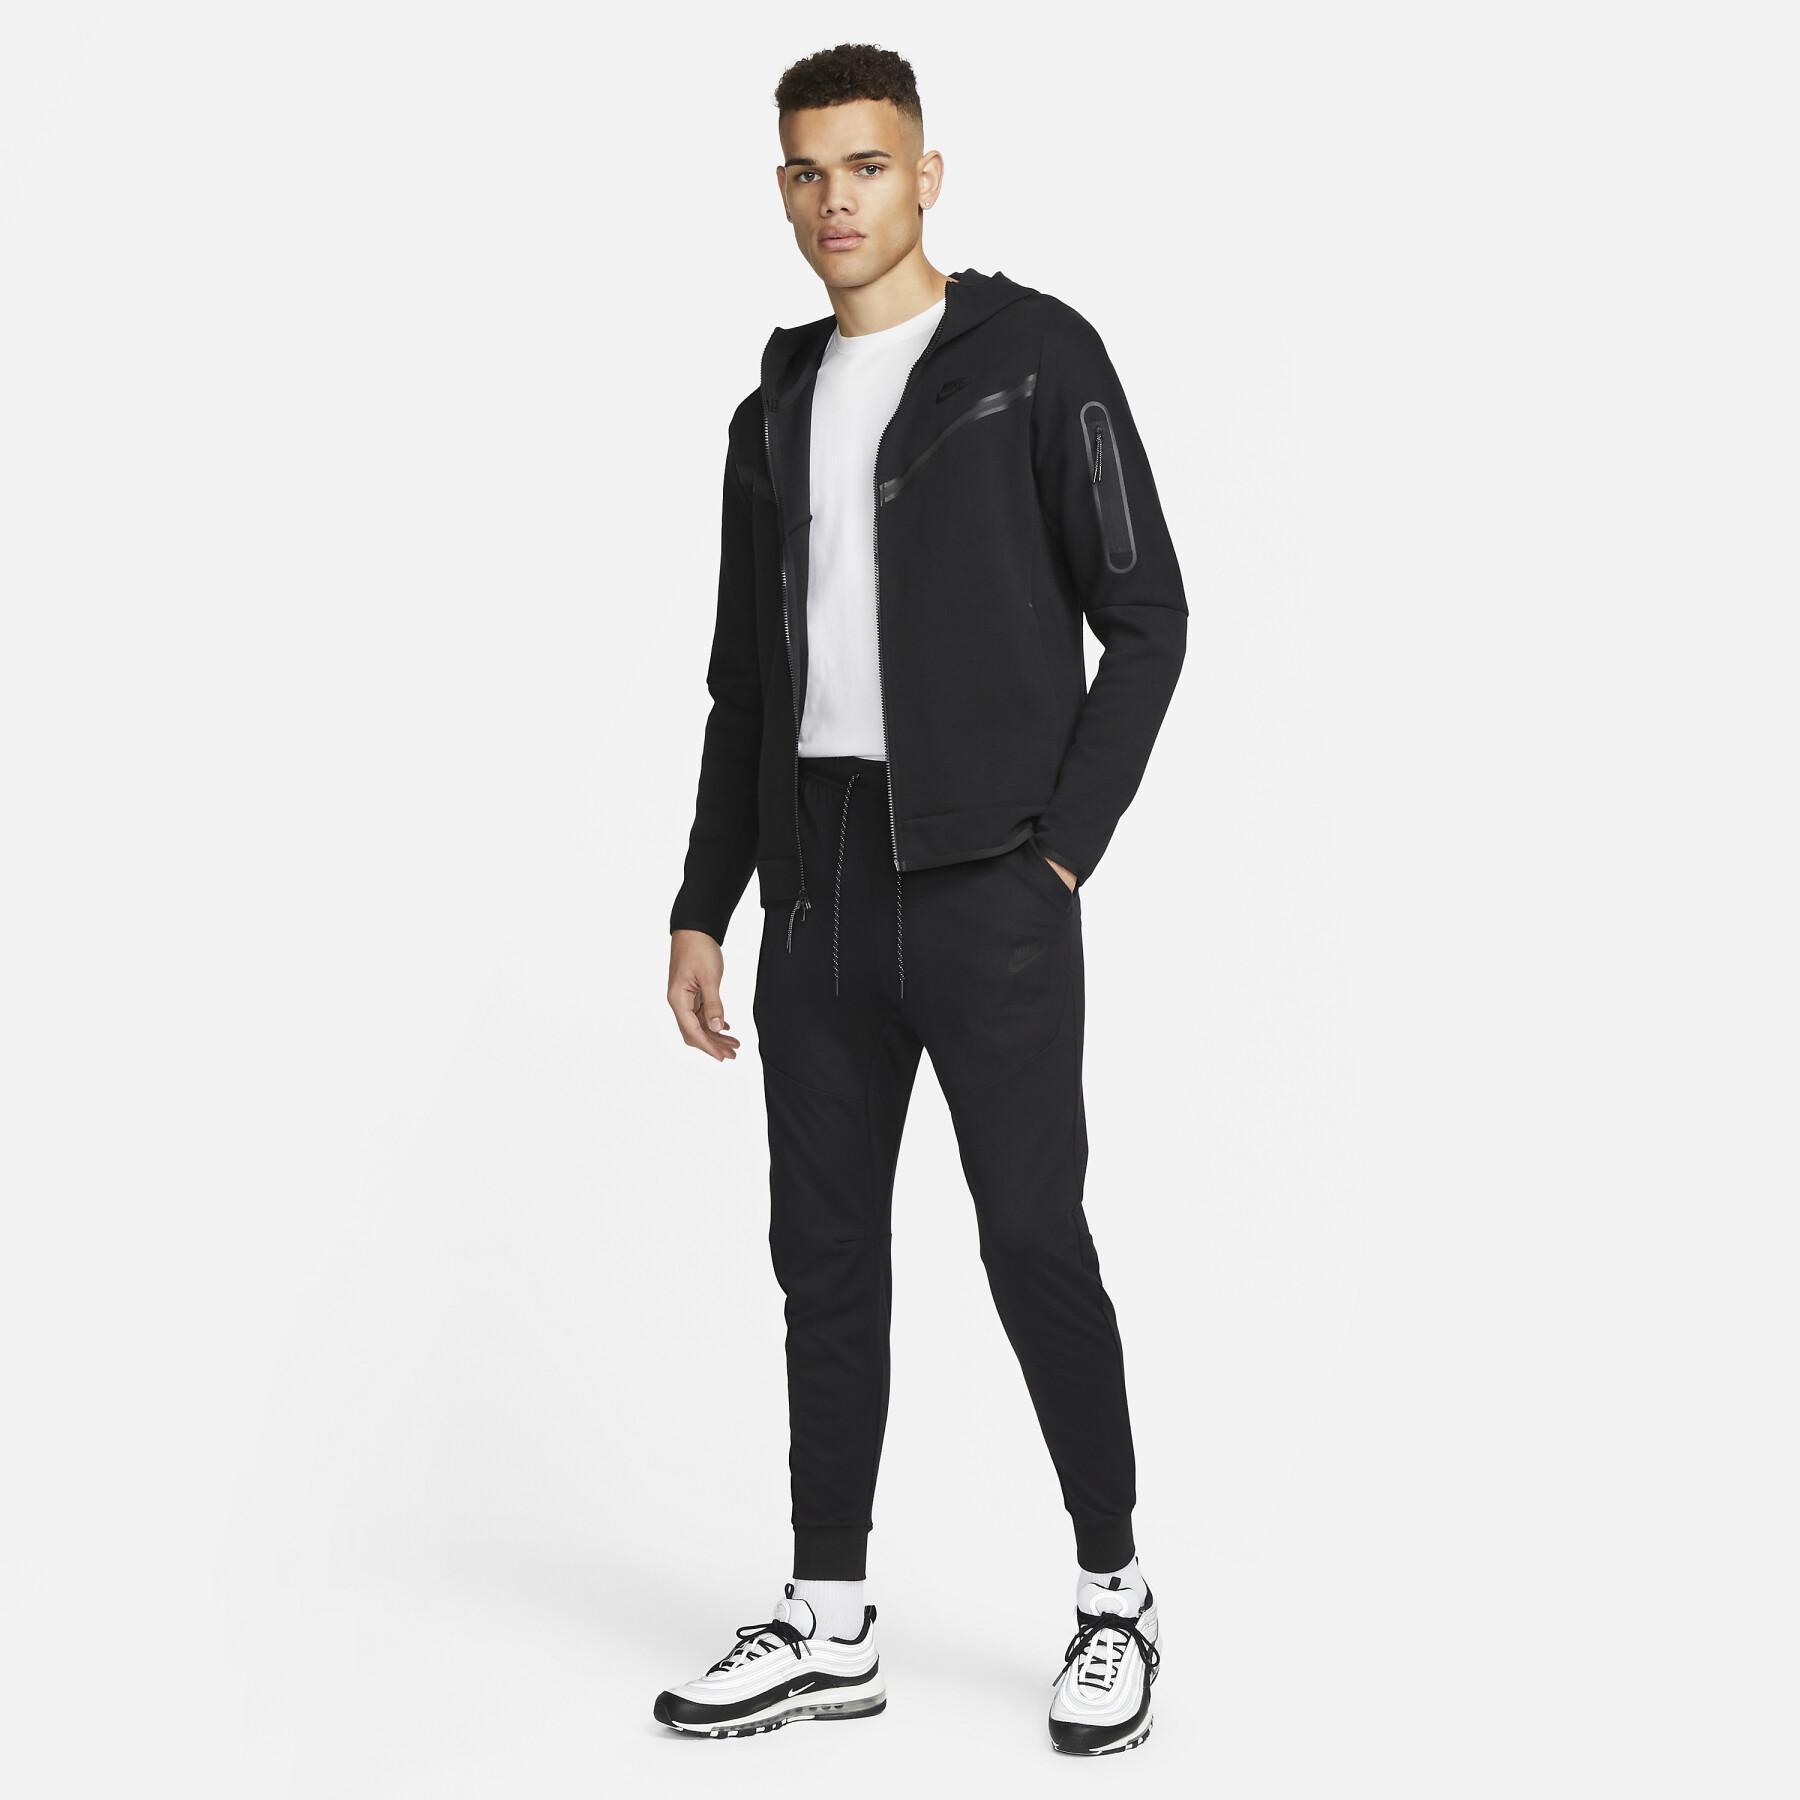 Jogging Nike Tech - Nike - Men's clothing - Running